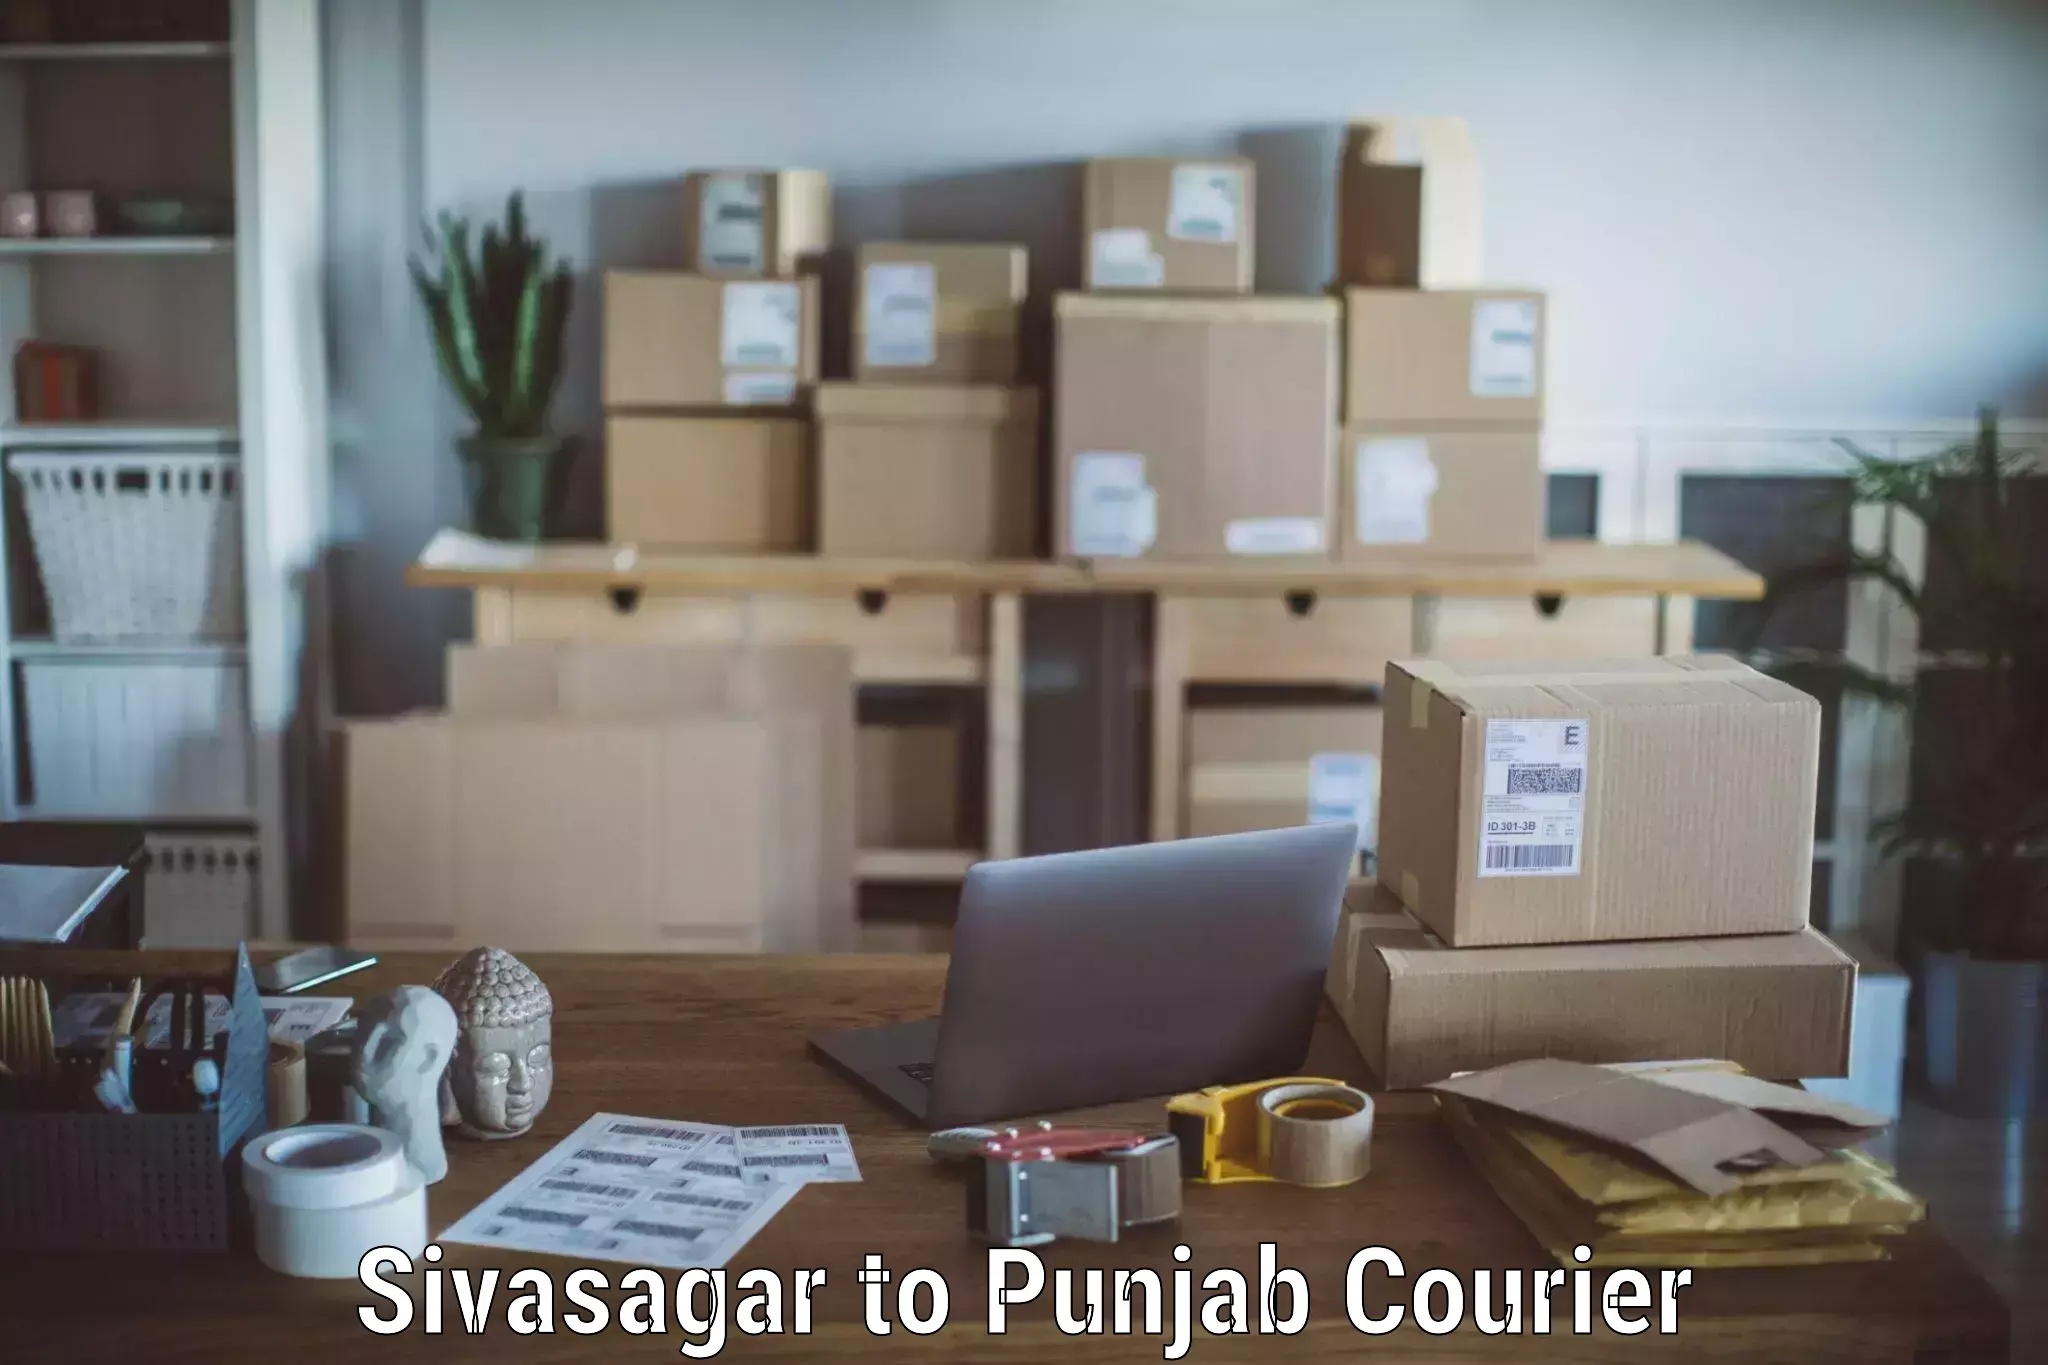 Furniture delivery service Sivasagar to Jalandhar